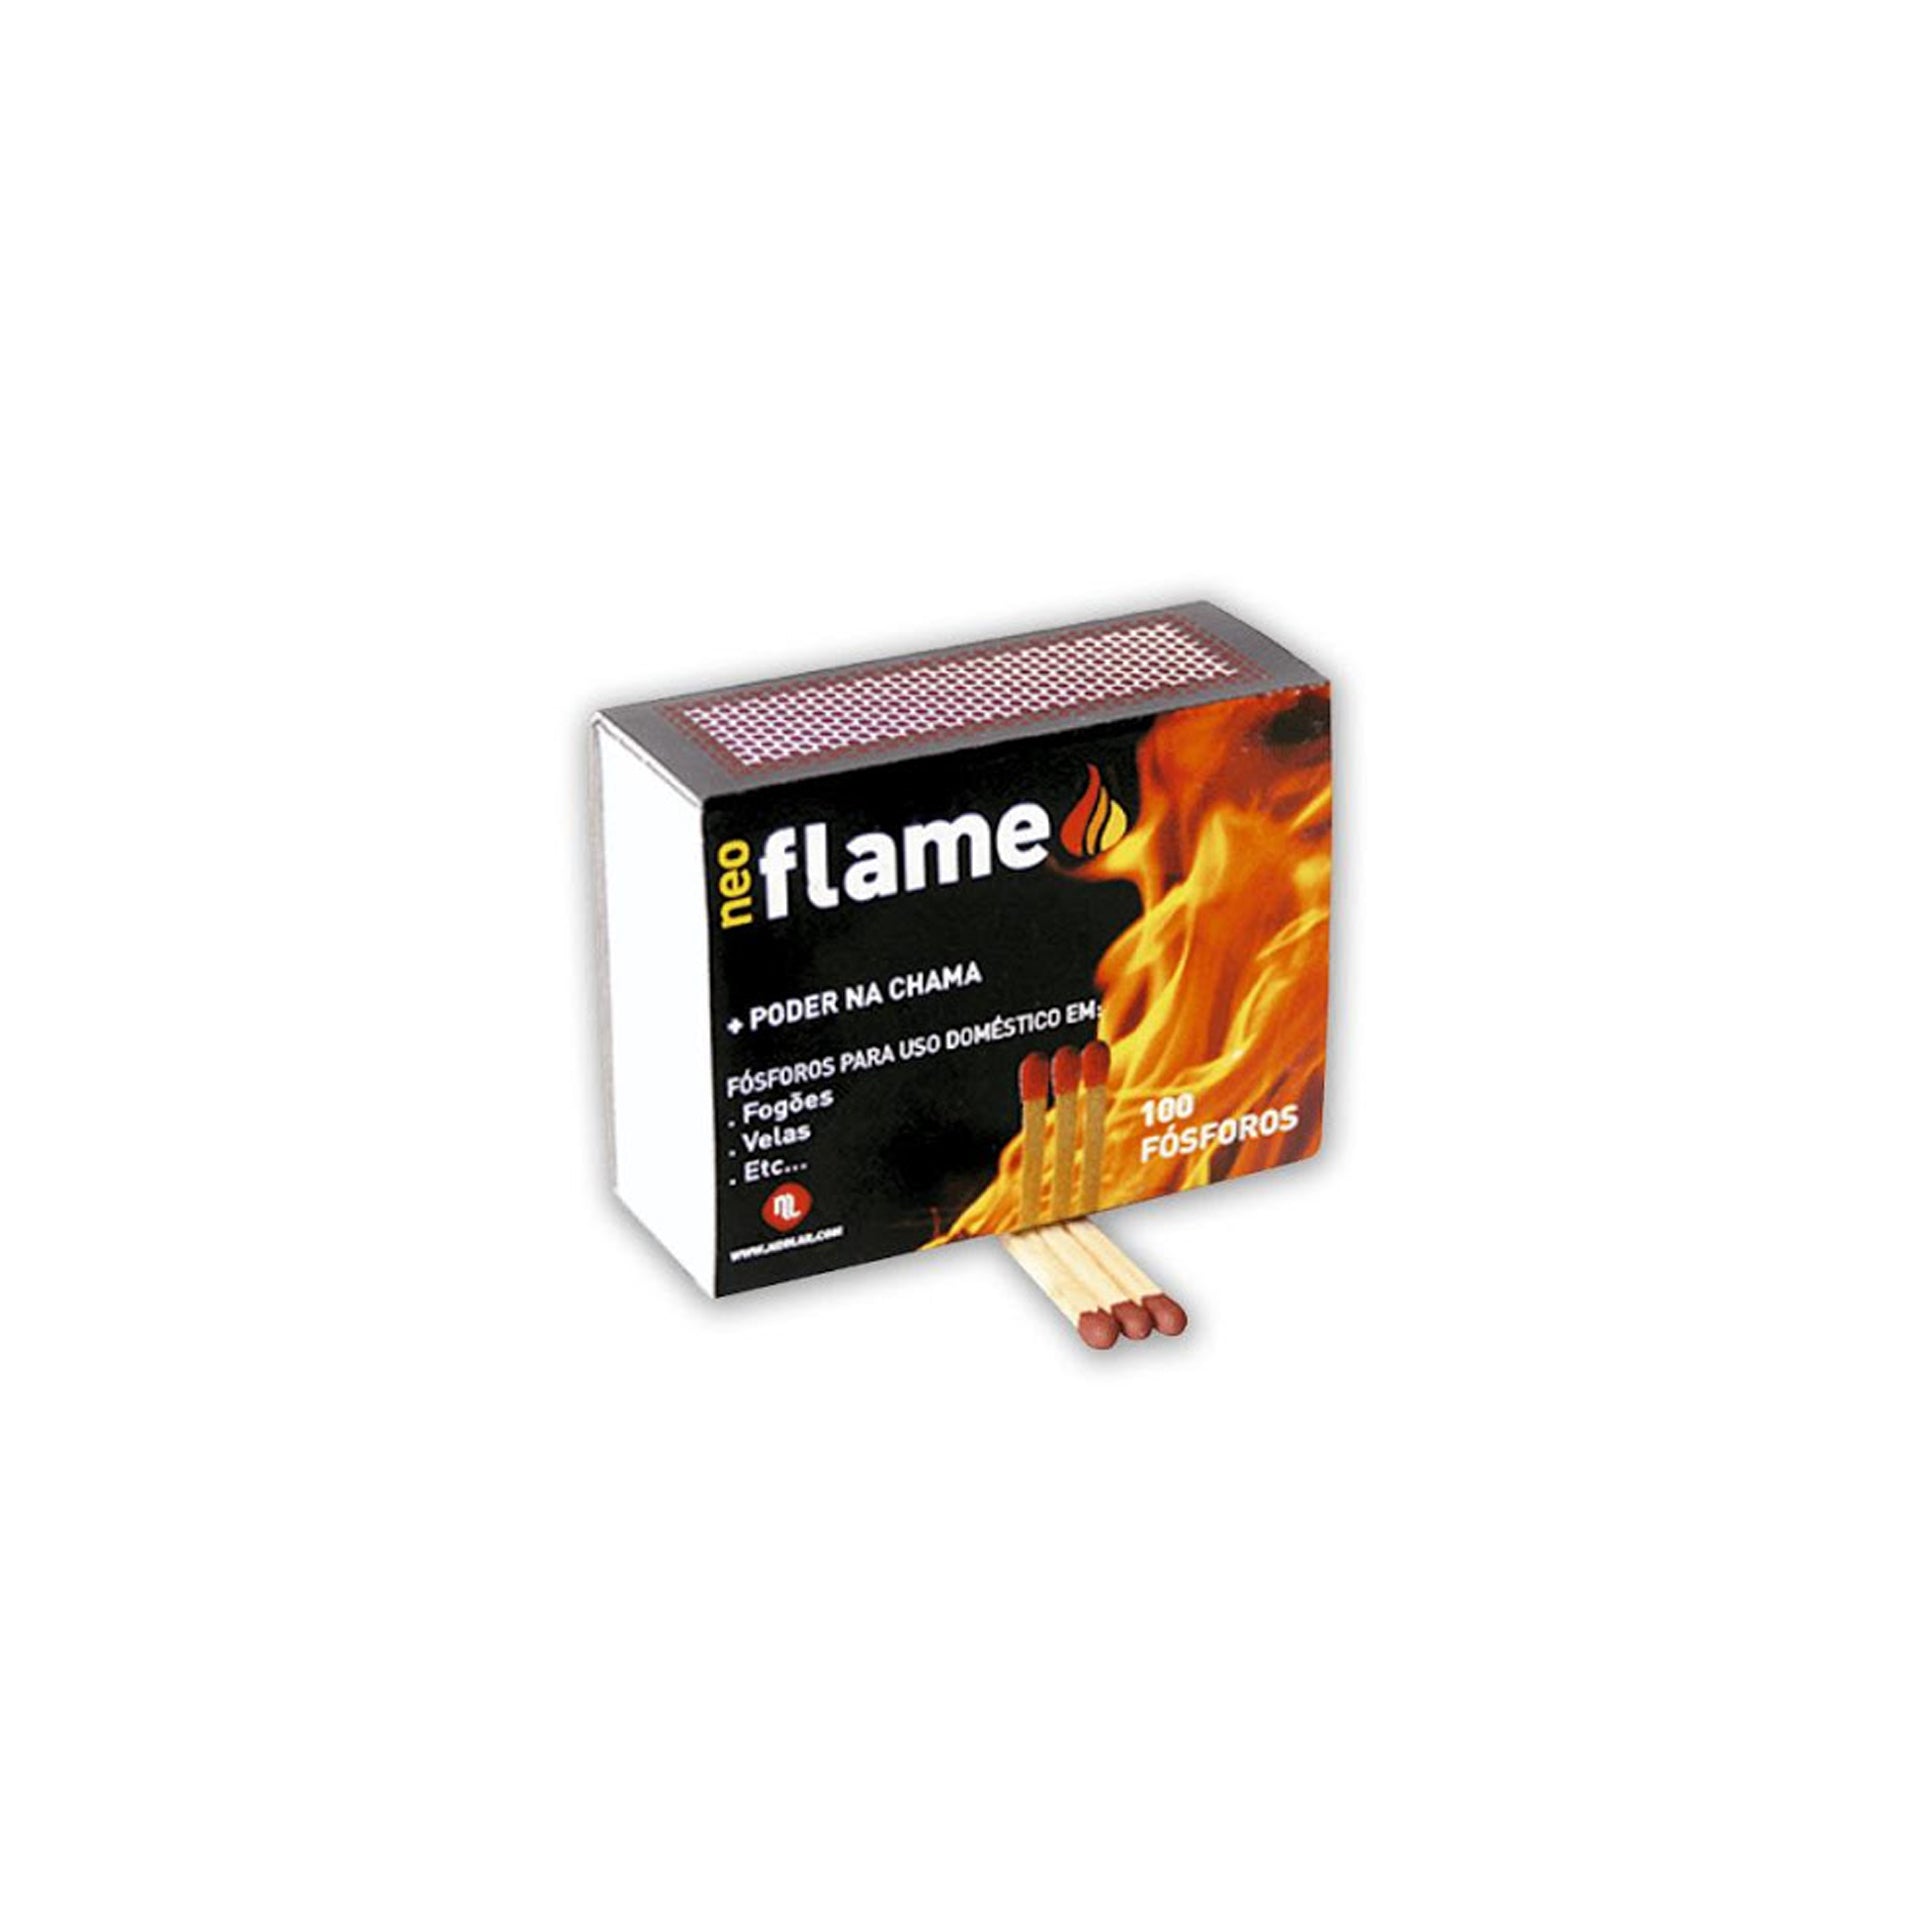 Flamefast Fósforo Neoflame 100 un - Pack 4 x 100 un